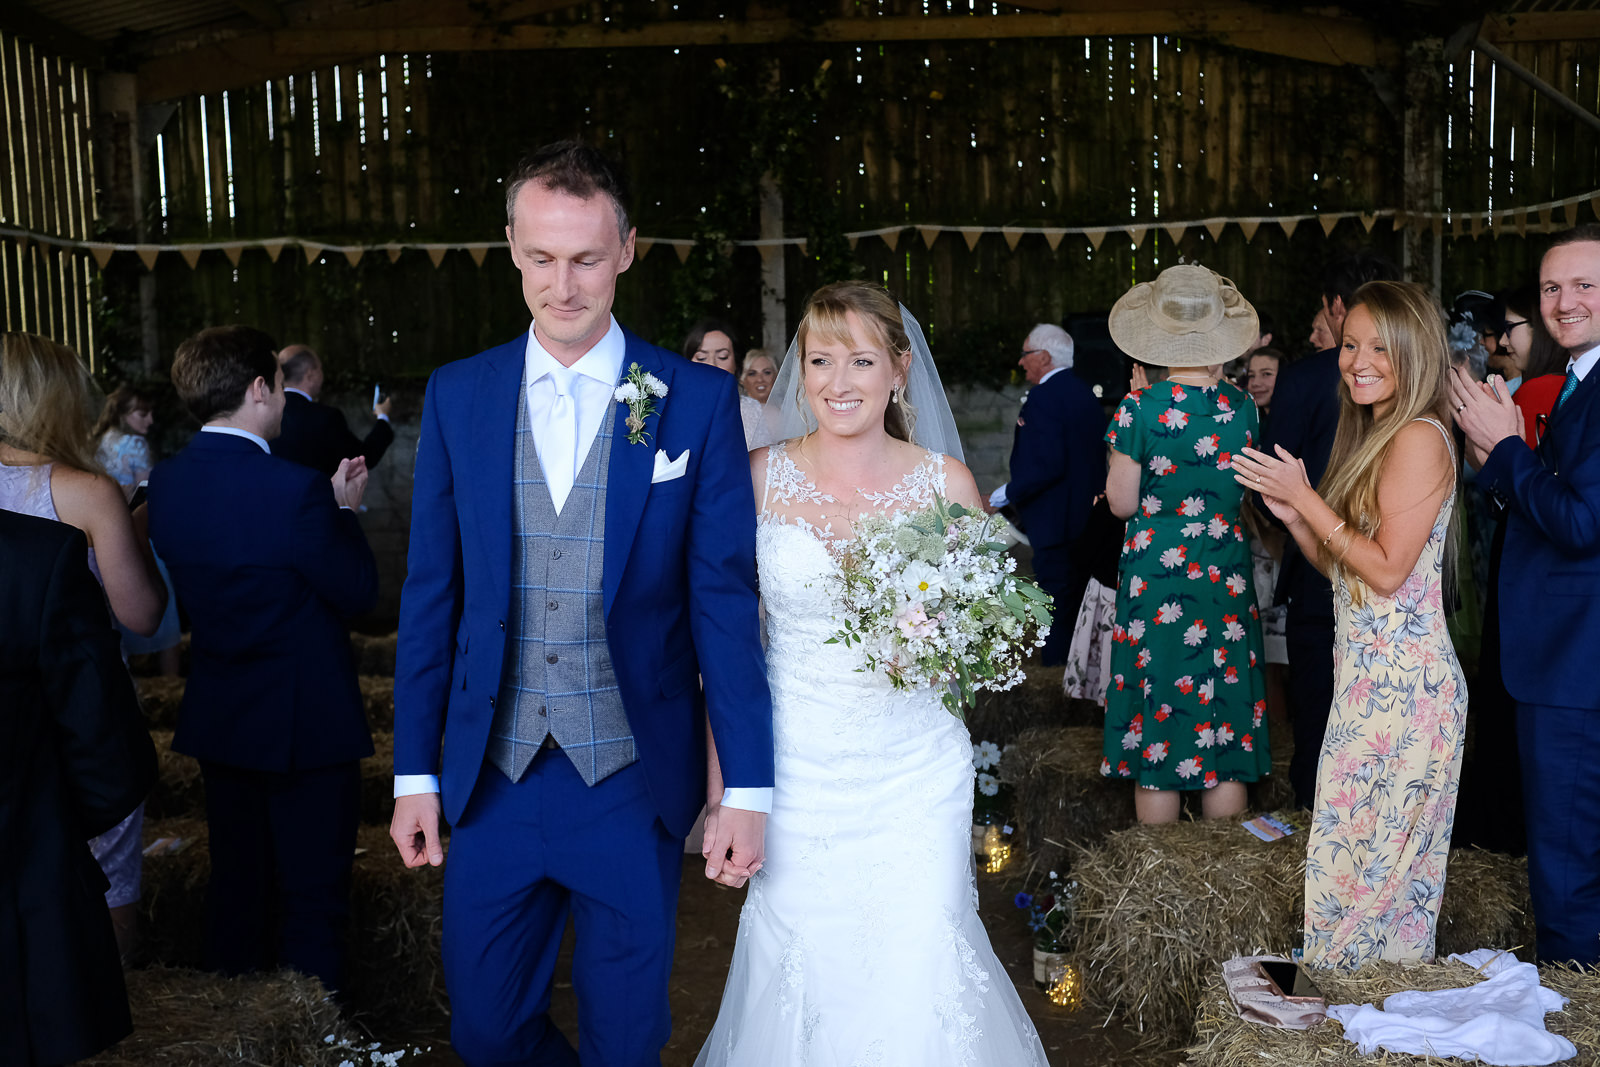 Roscarrock Farm wedding in Cornwall 036.jpg